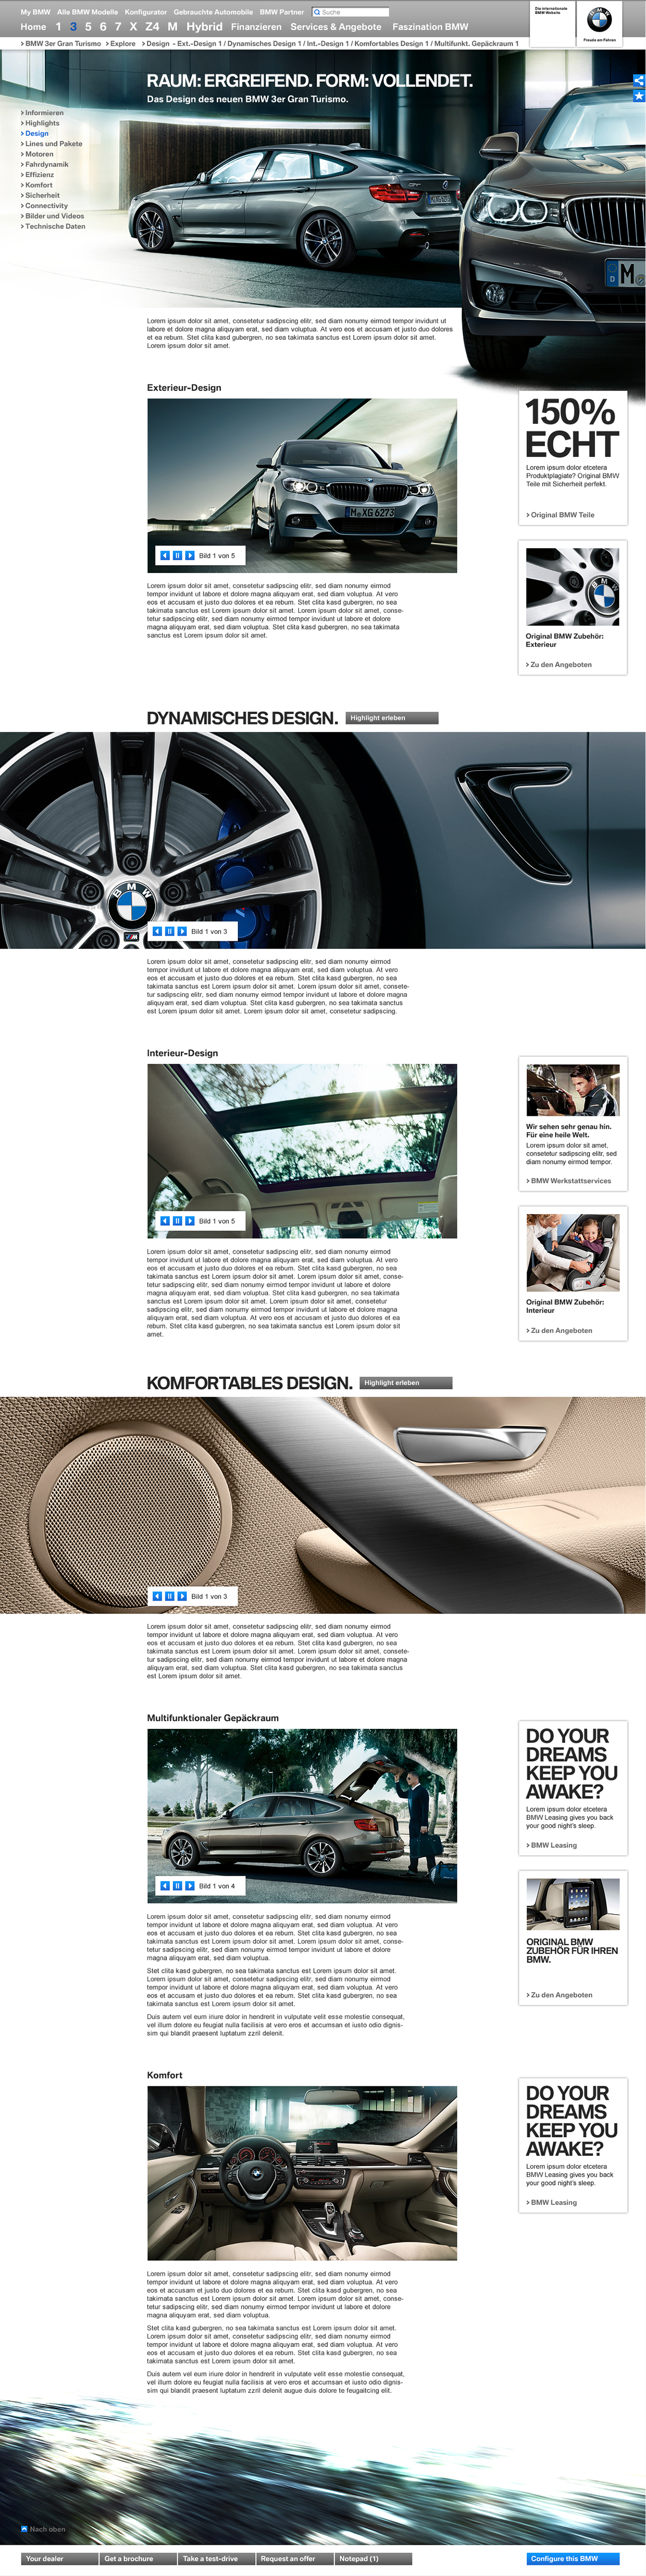 BMW online campaign showroom Webspecial